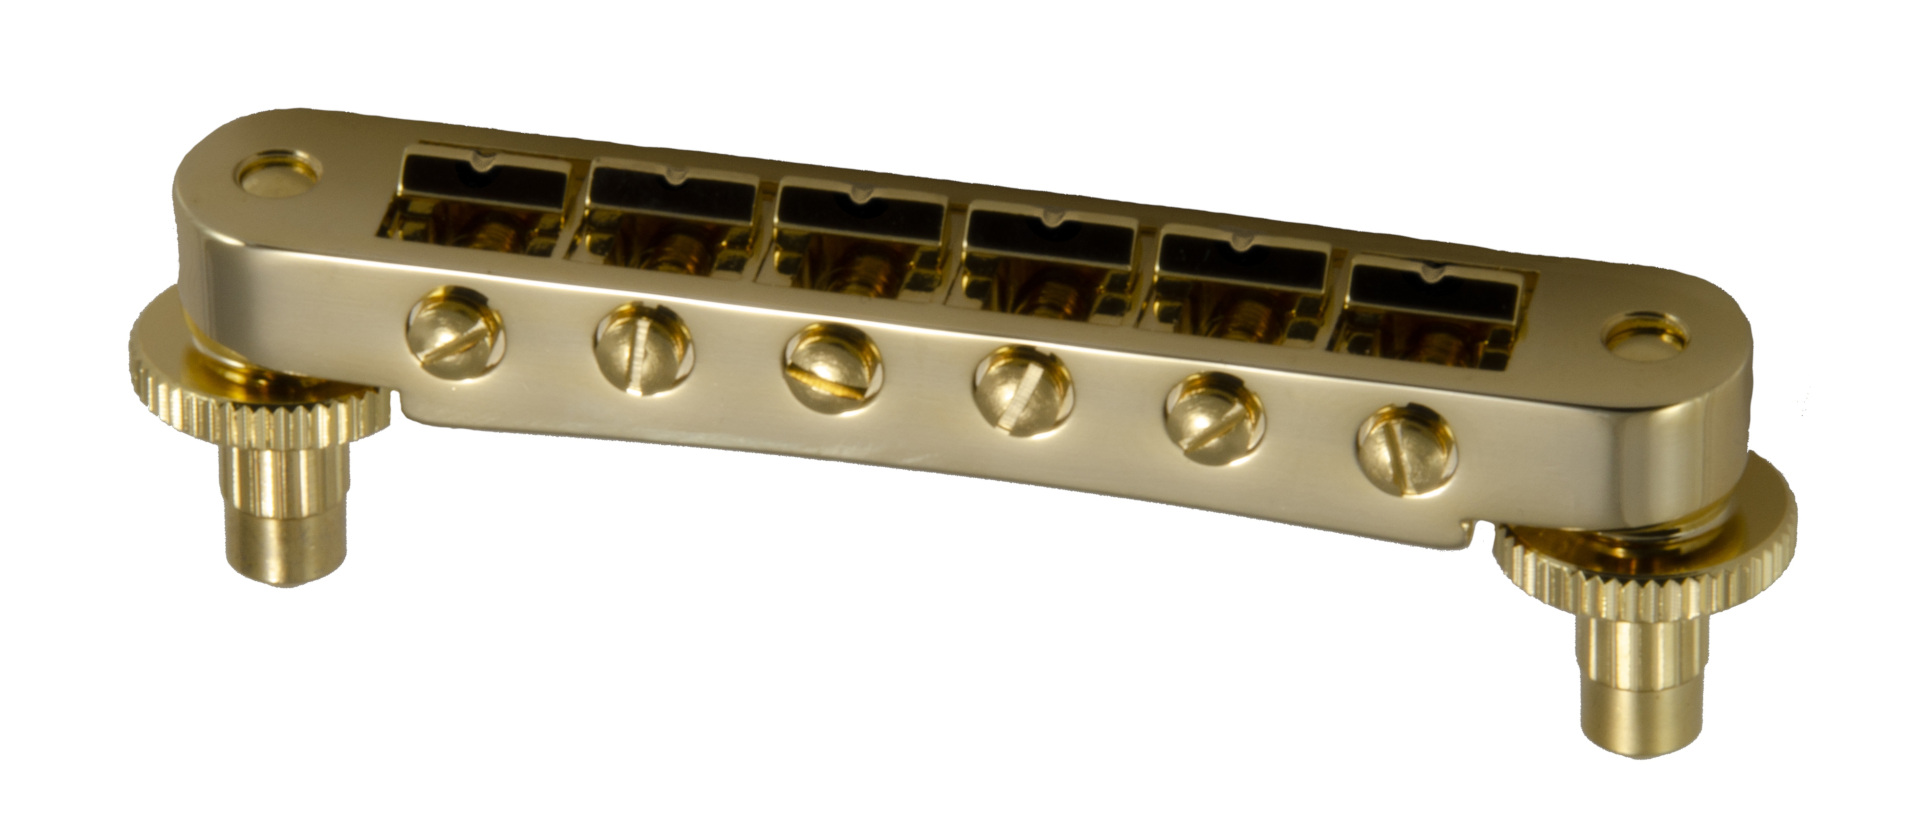 Grover 520G Tune-O-Matic Guitar Bridge (Notched) - Gold